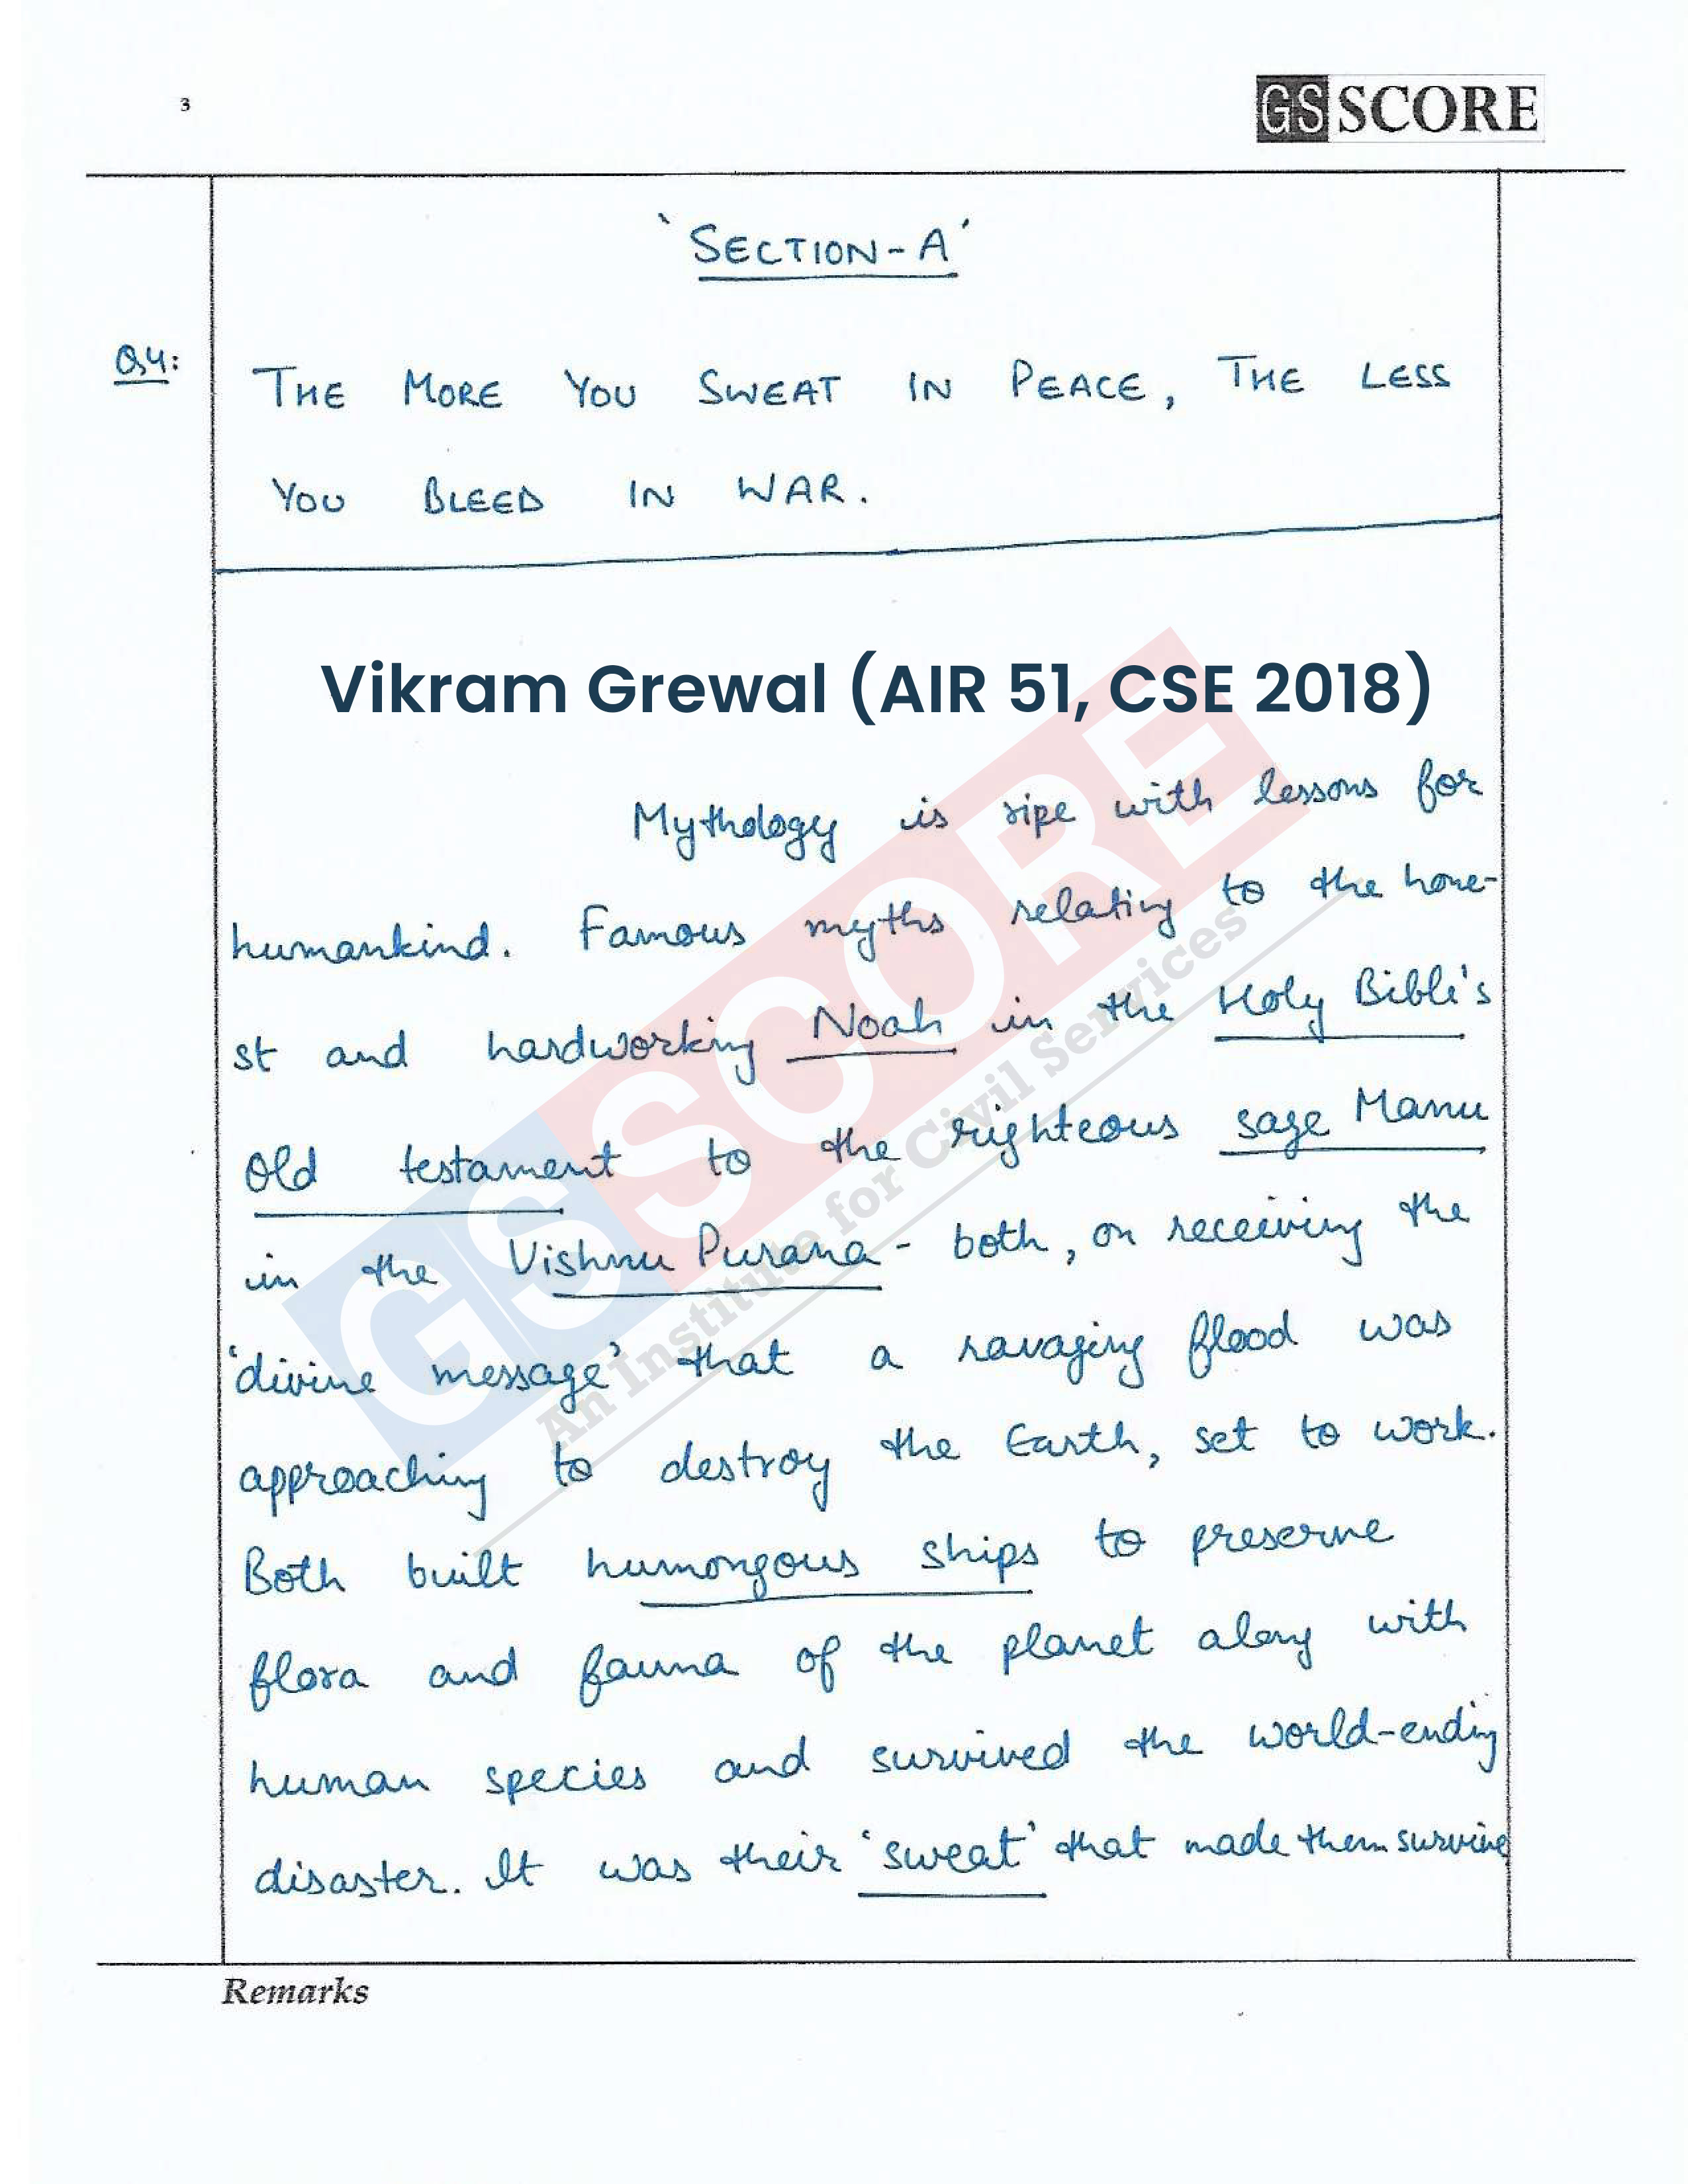 vikram grewal essay copy gs score